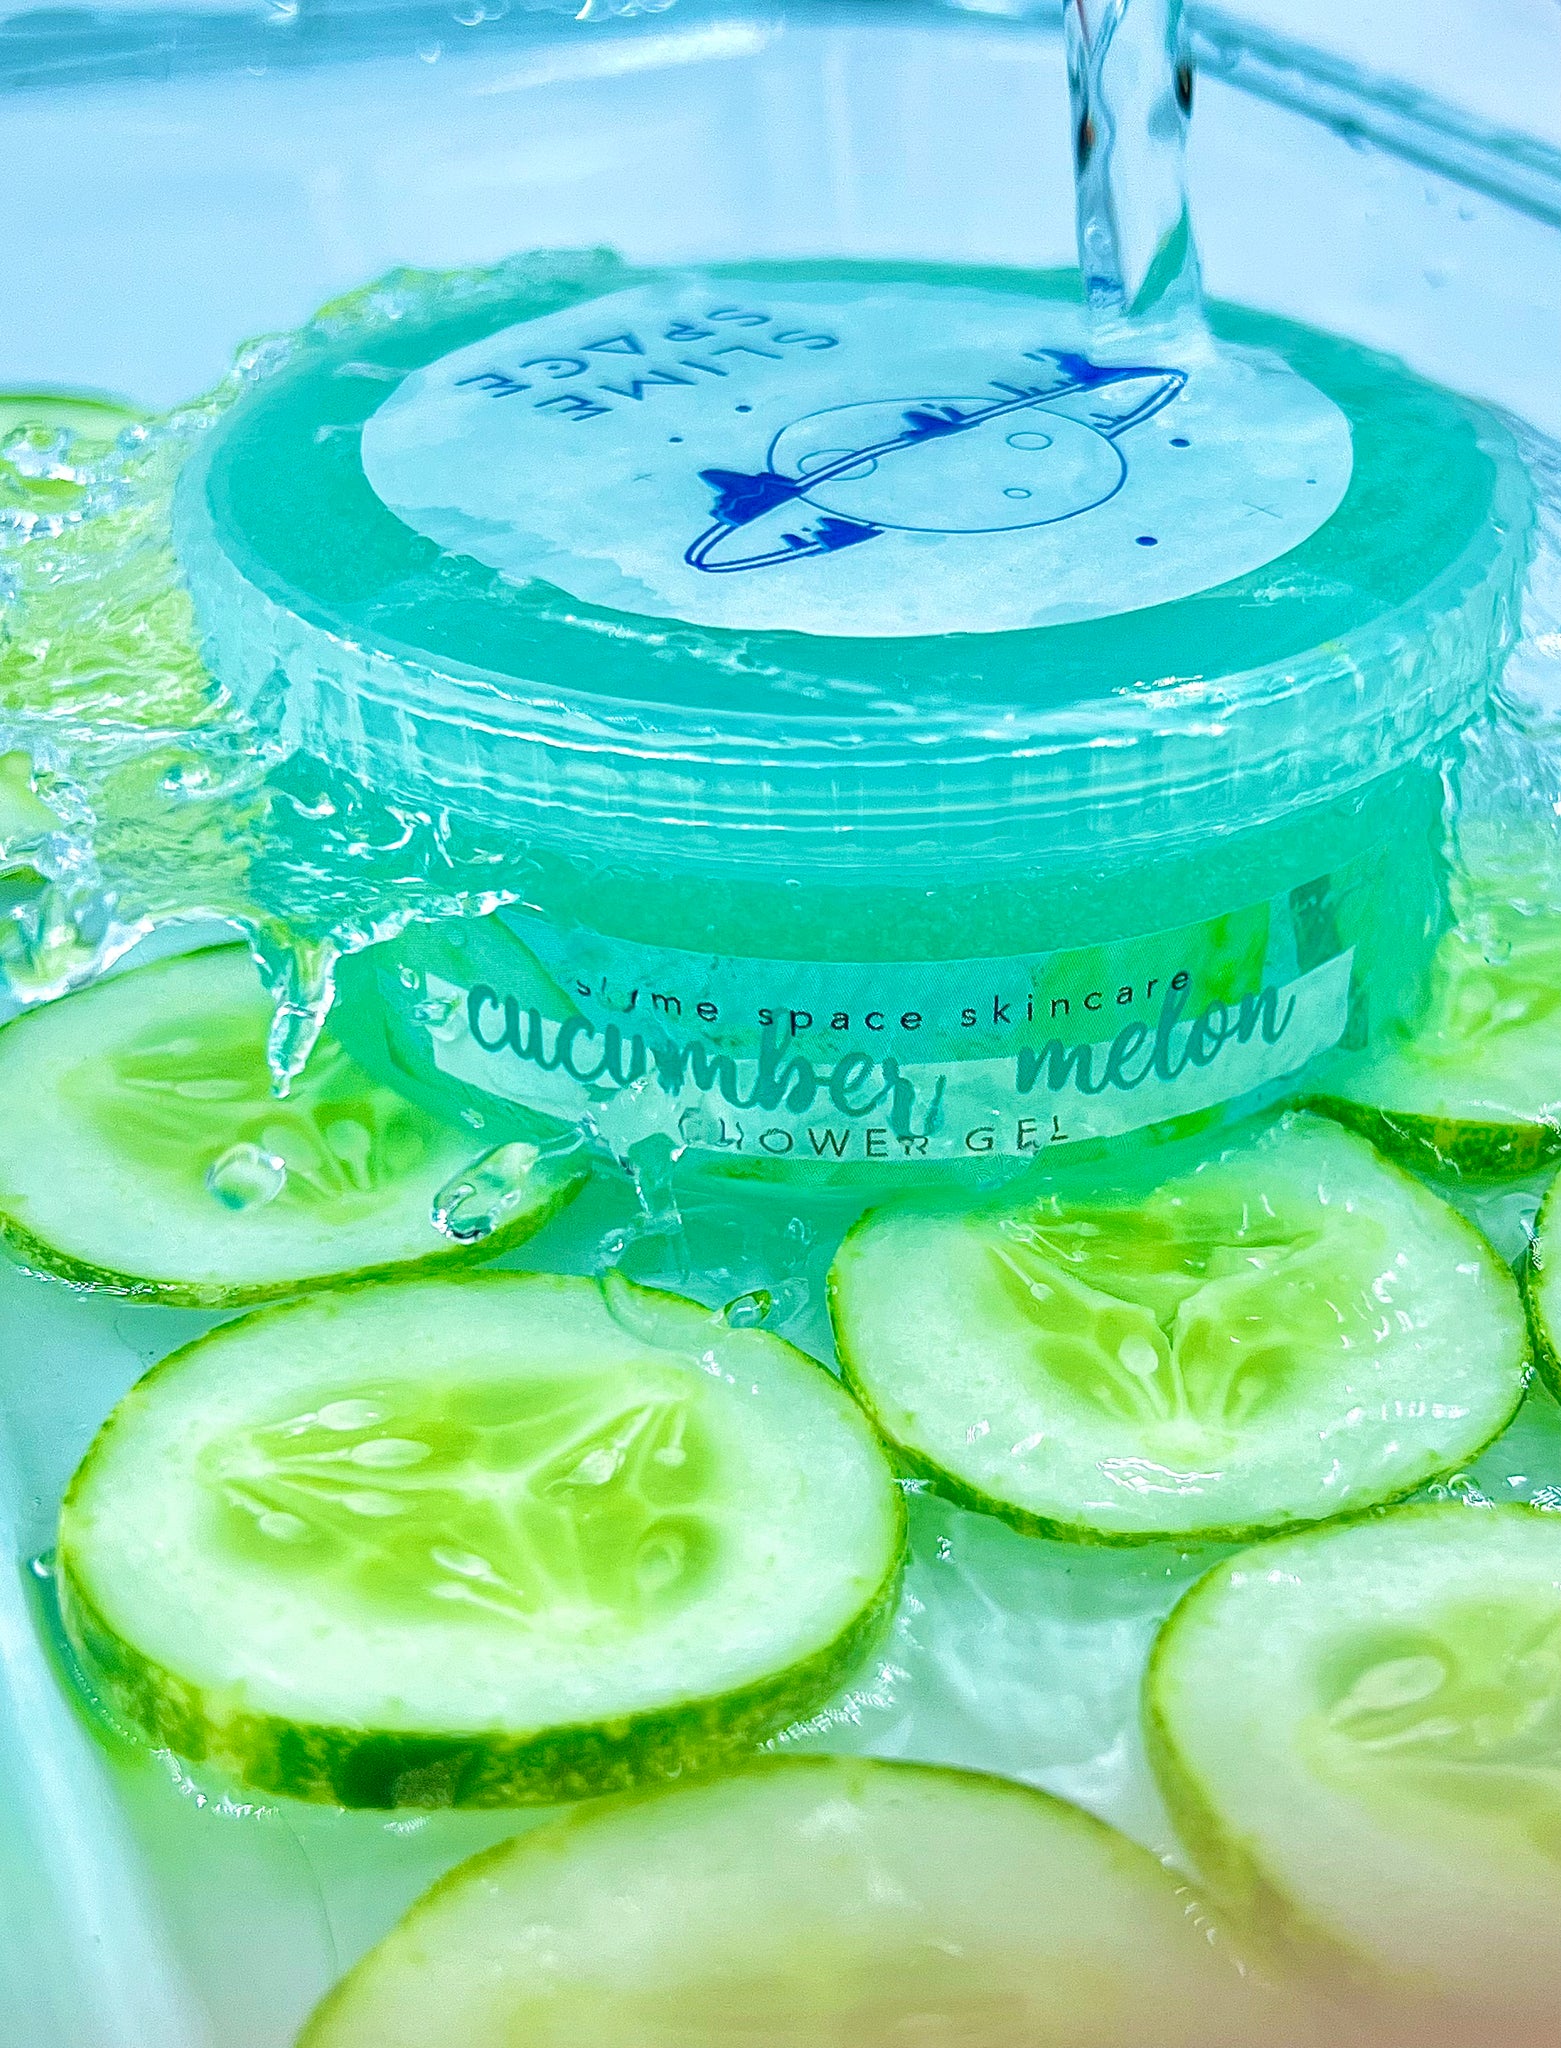 Cucumber Melon Shower Gel